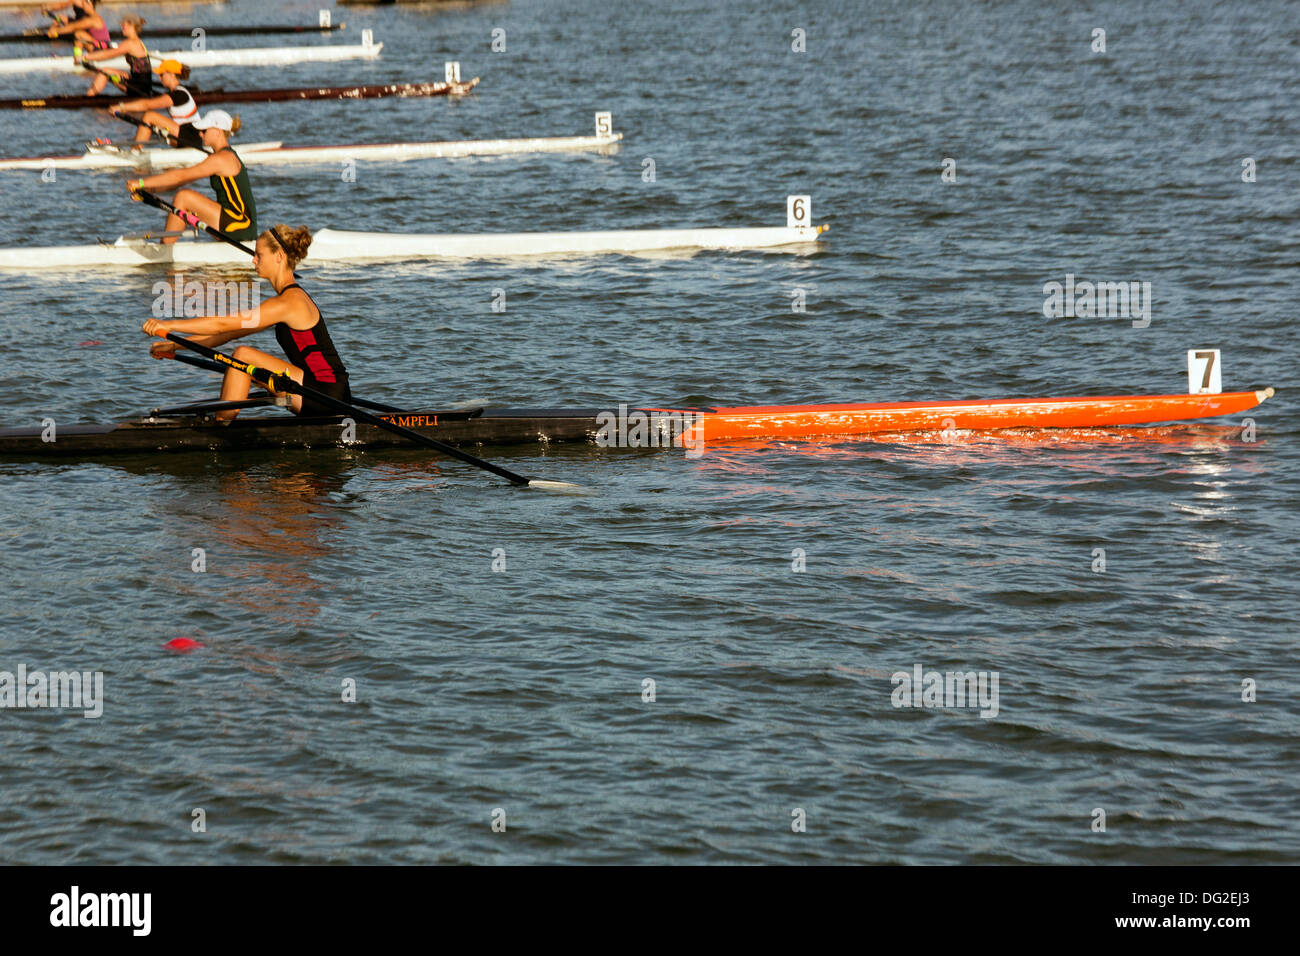 single women's rowing regatta start of the race Stock Photo